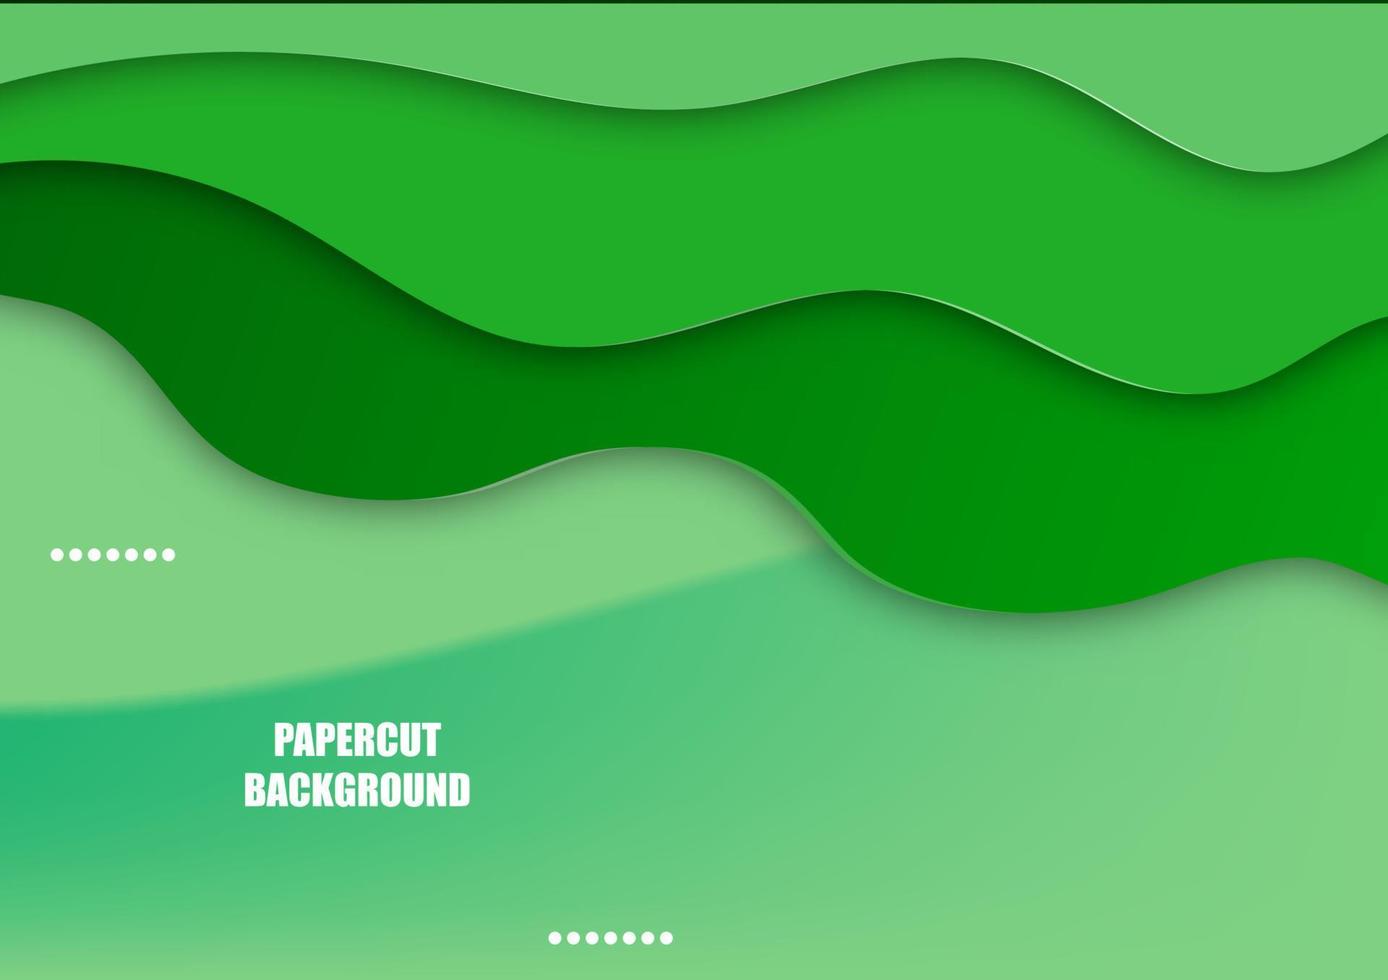 abstrakter hintergrund grüner farbton grafikstil papercut für karten- oder papiervektorillustration vektor